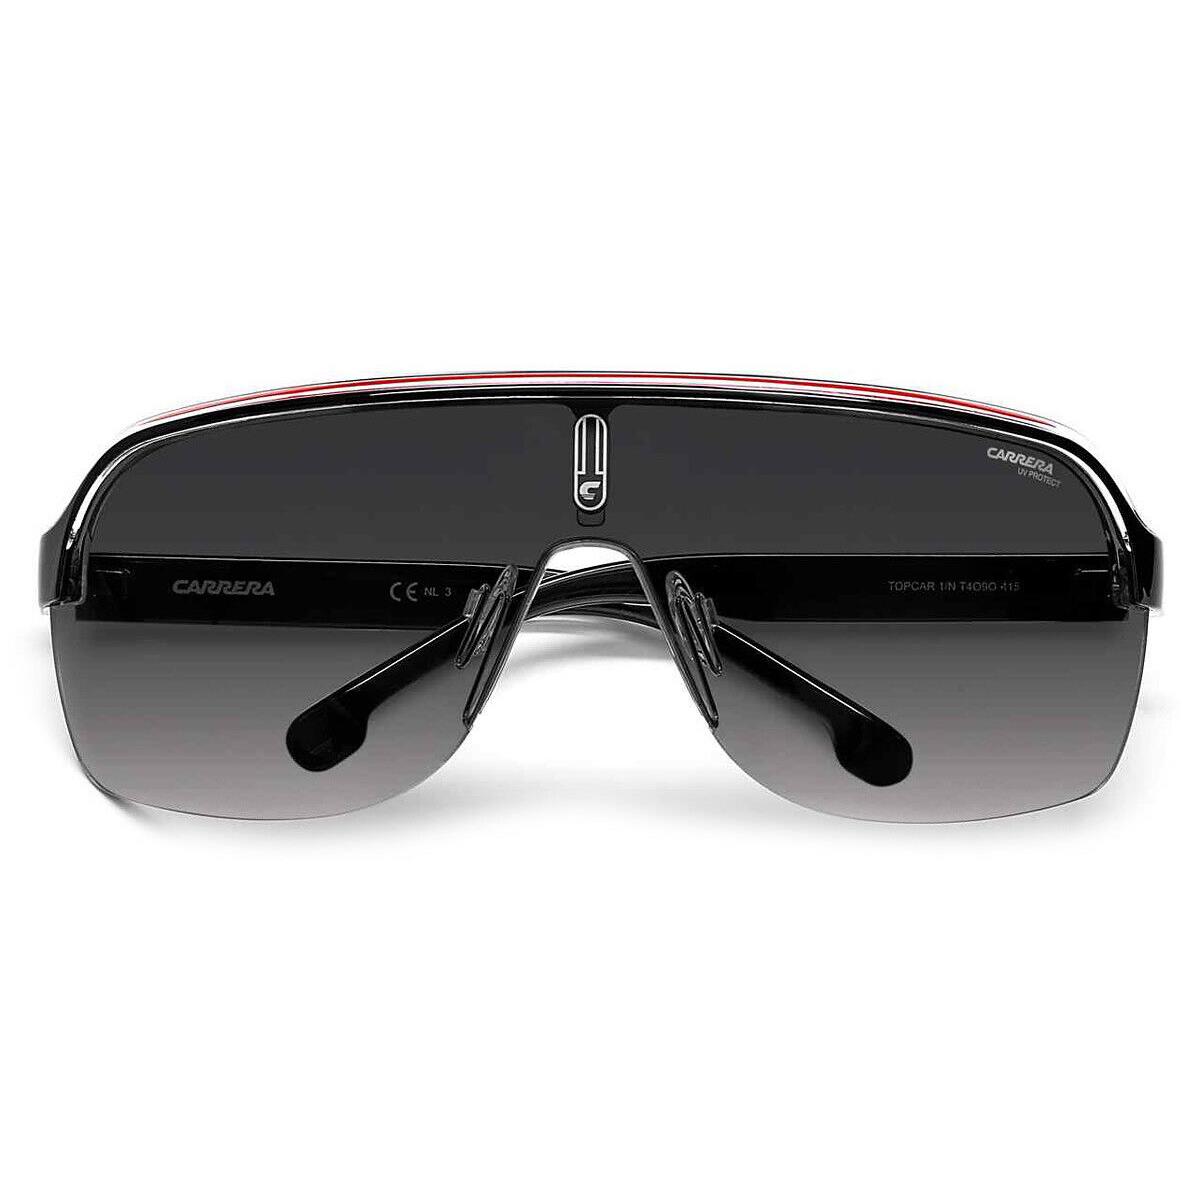 Carrera Topcar 1/N Sunglasses Black White Red Gray Shaded 99